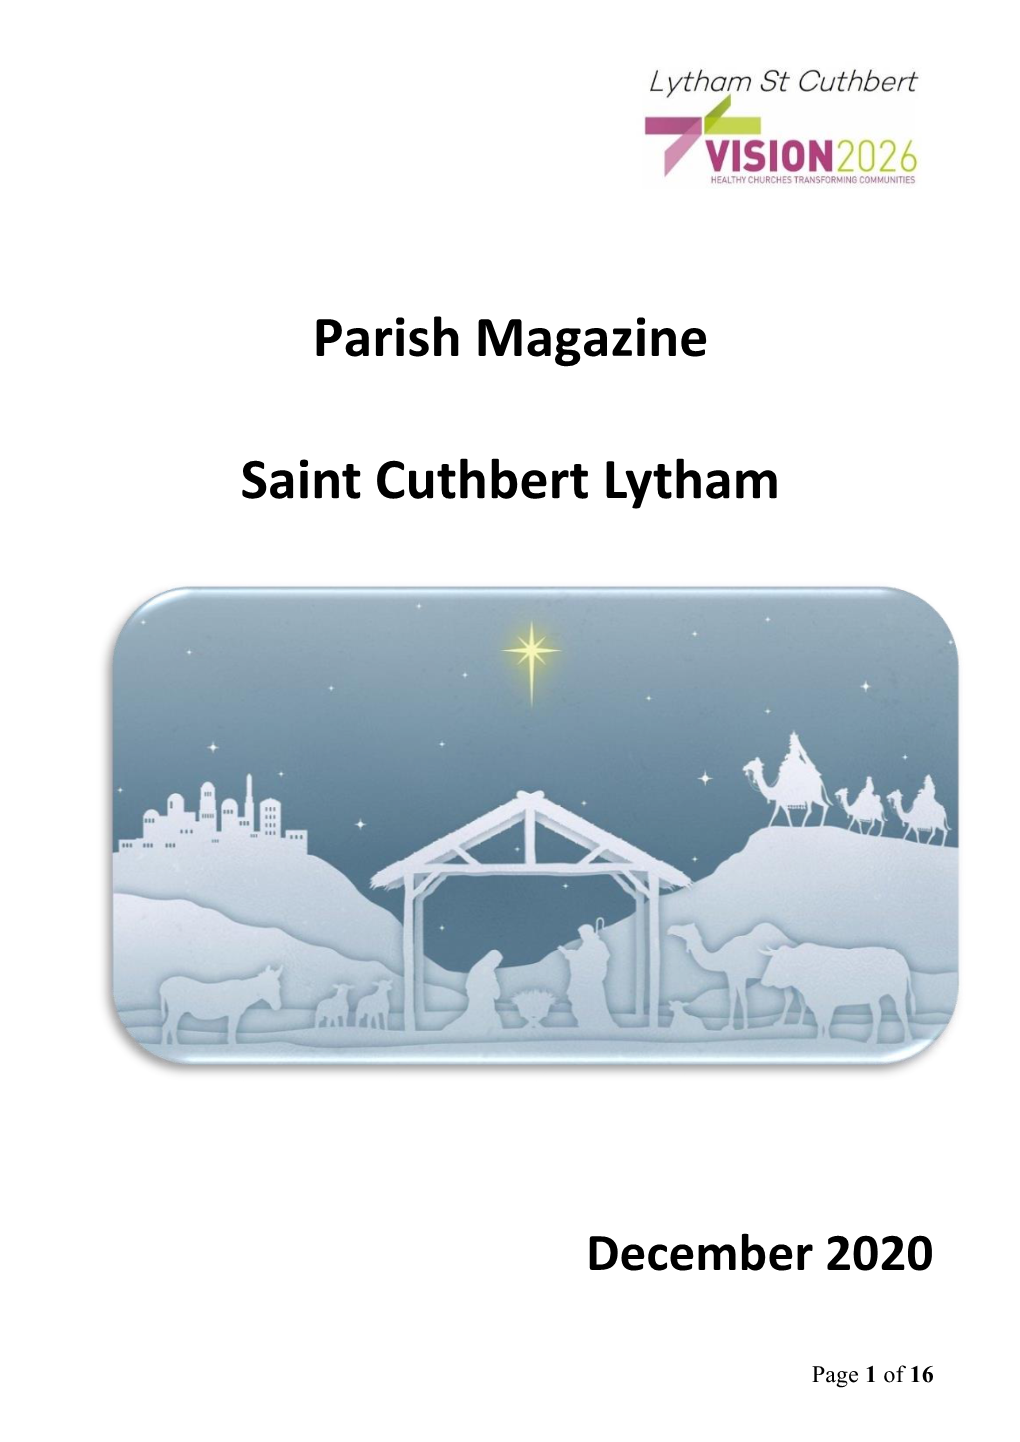 Parish Magazine Saint Cuthbert Lytham